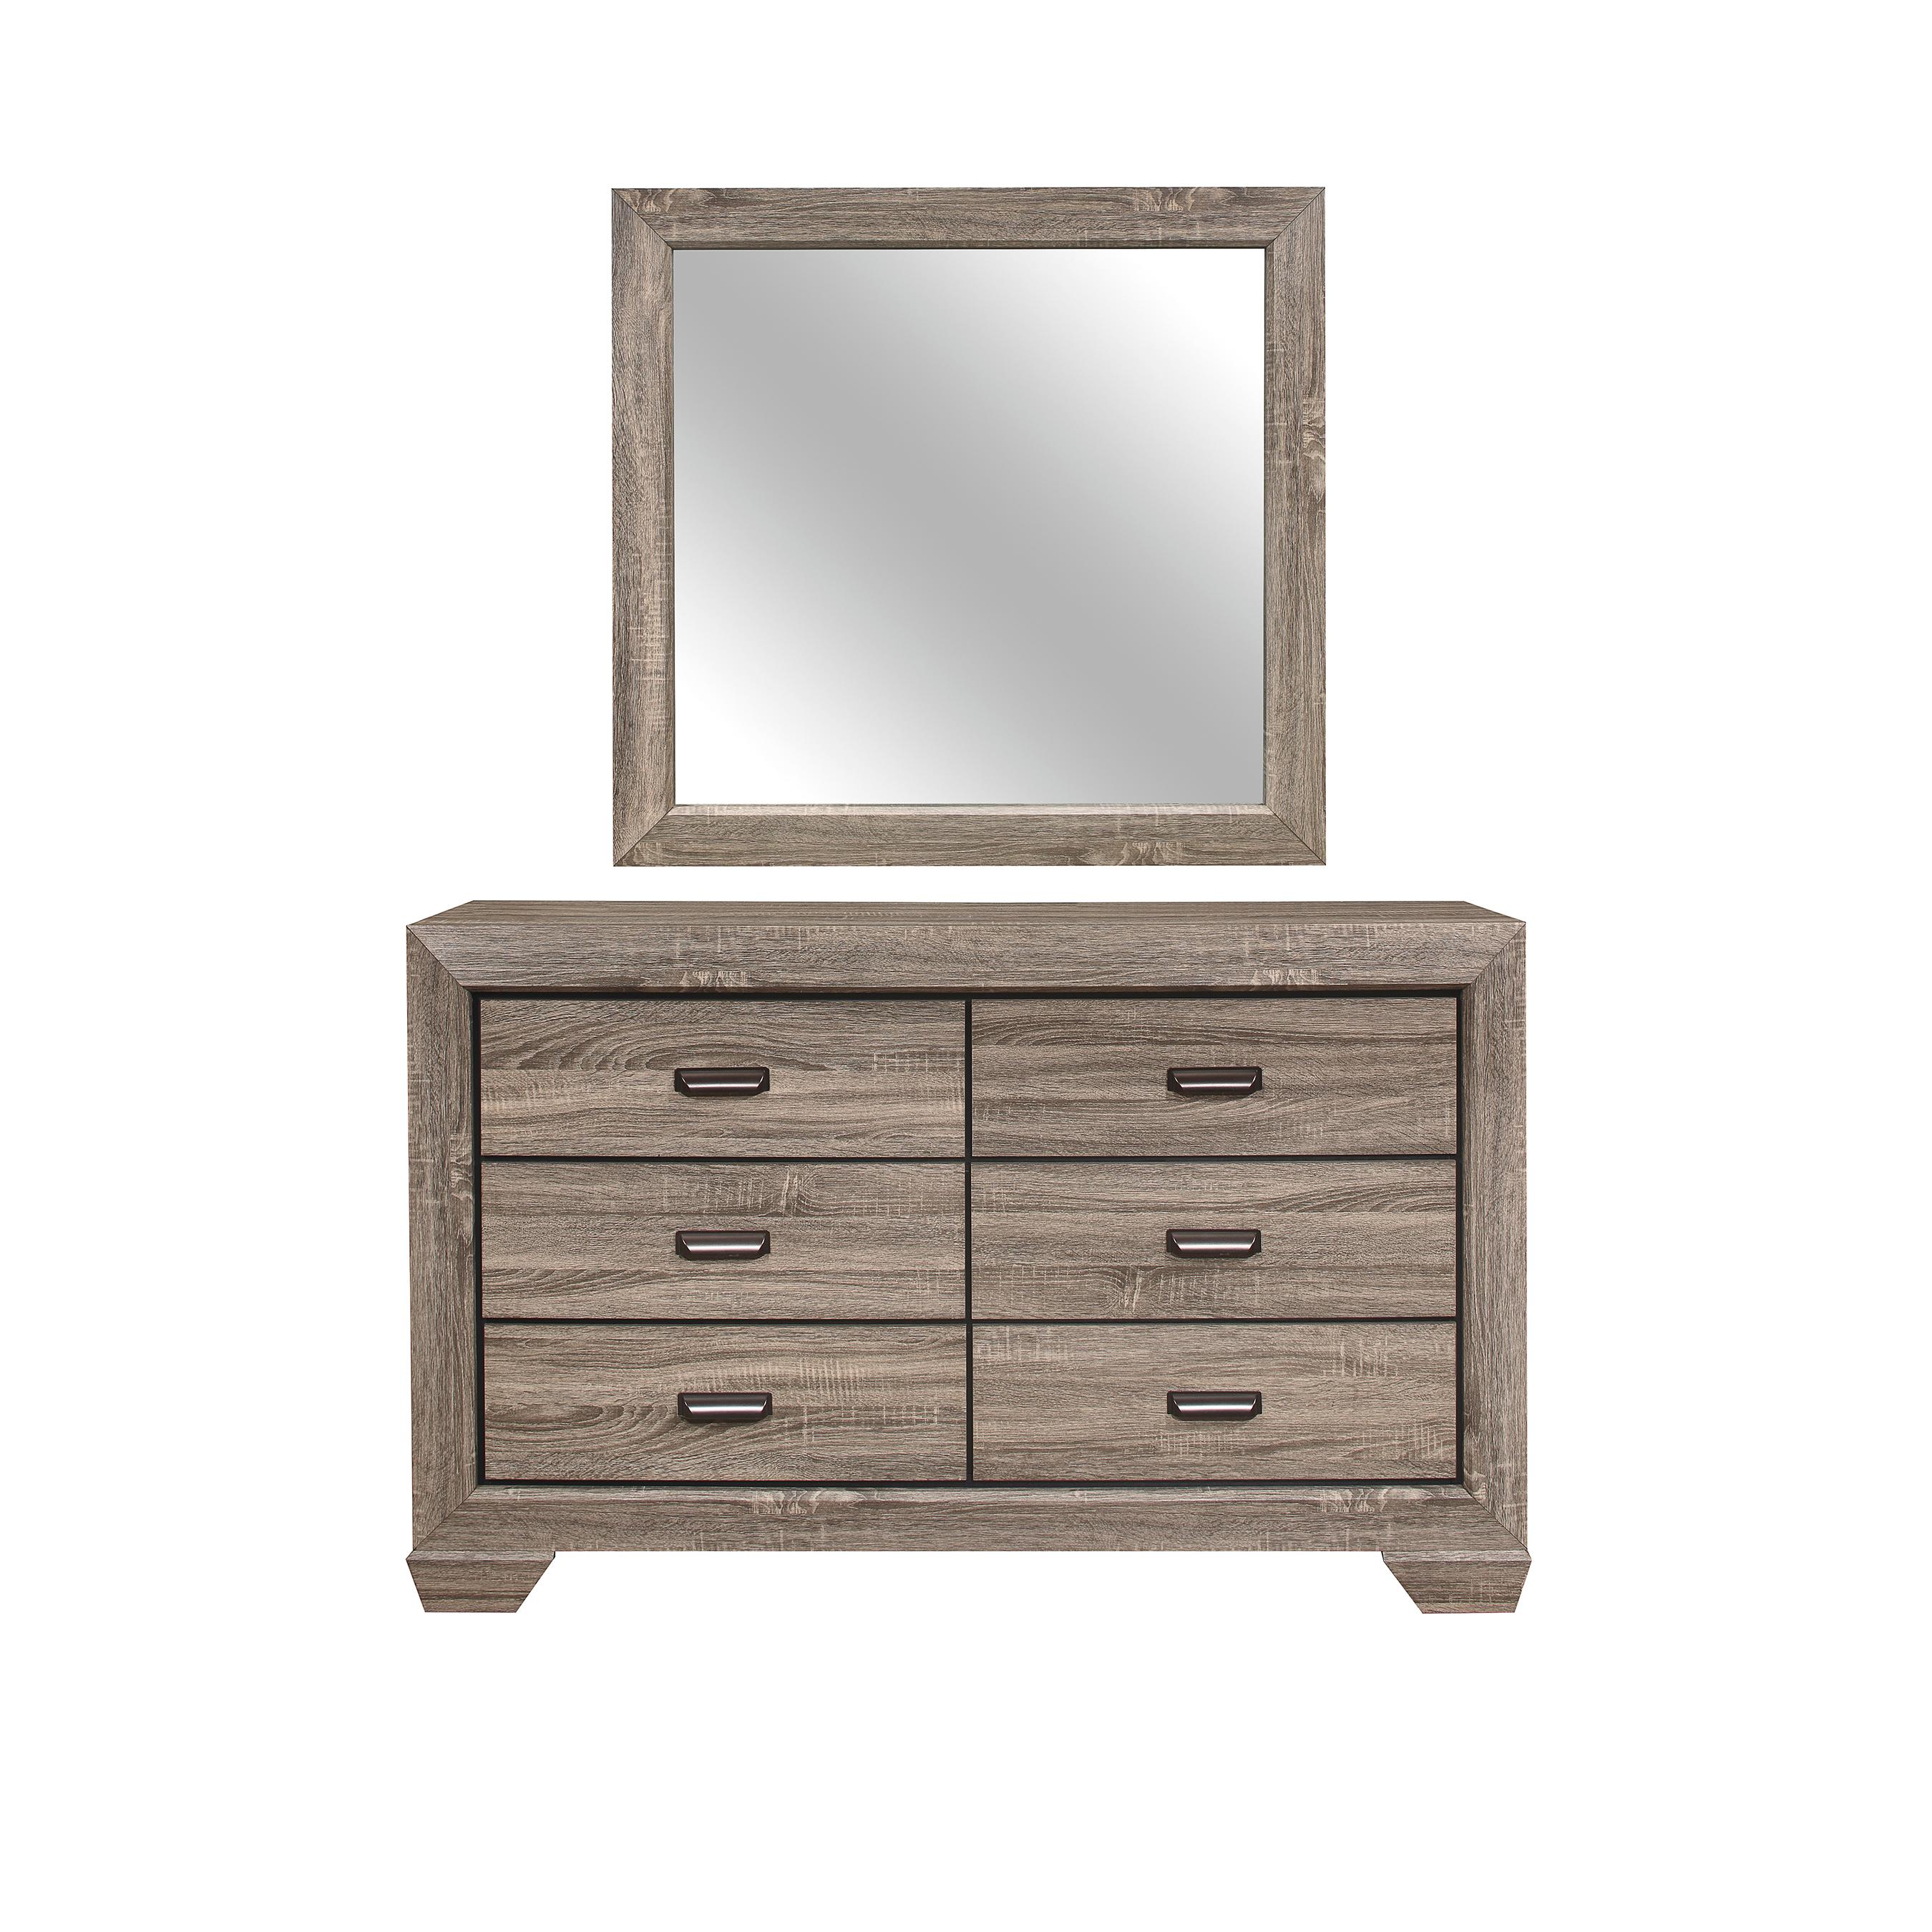 Rustic Dresser w/Mirror 1904-5*6-2PC Beechnut 1904-5*6-2PC in Natural 